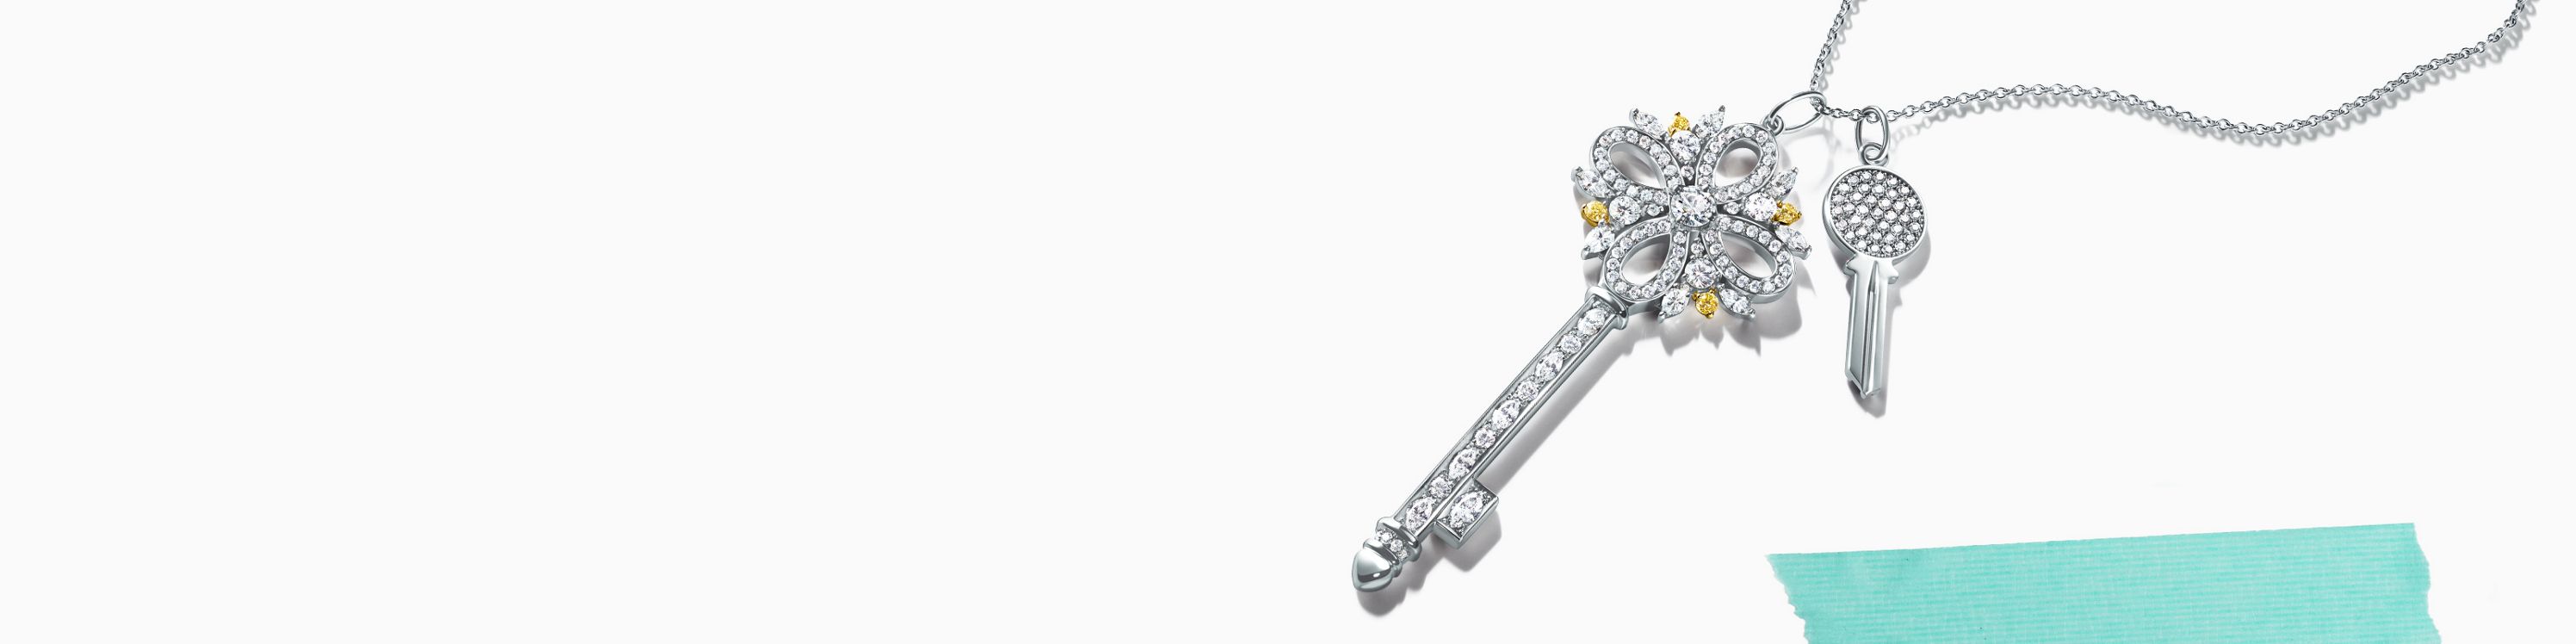 Tiffany Keys mini crown key pendant in 18k gold with diamonds.